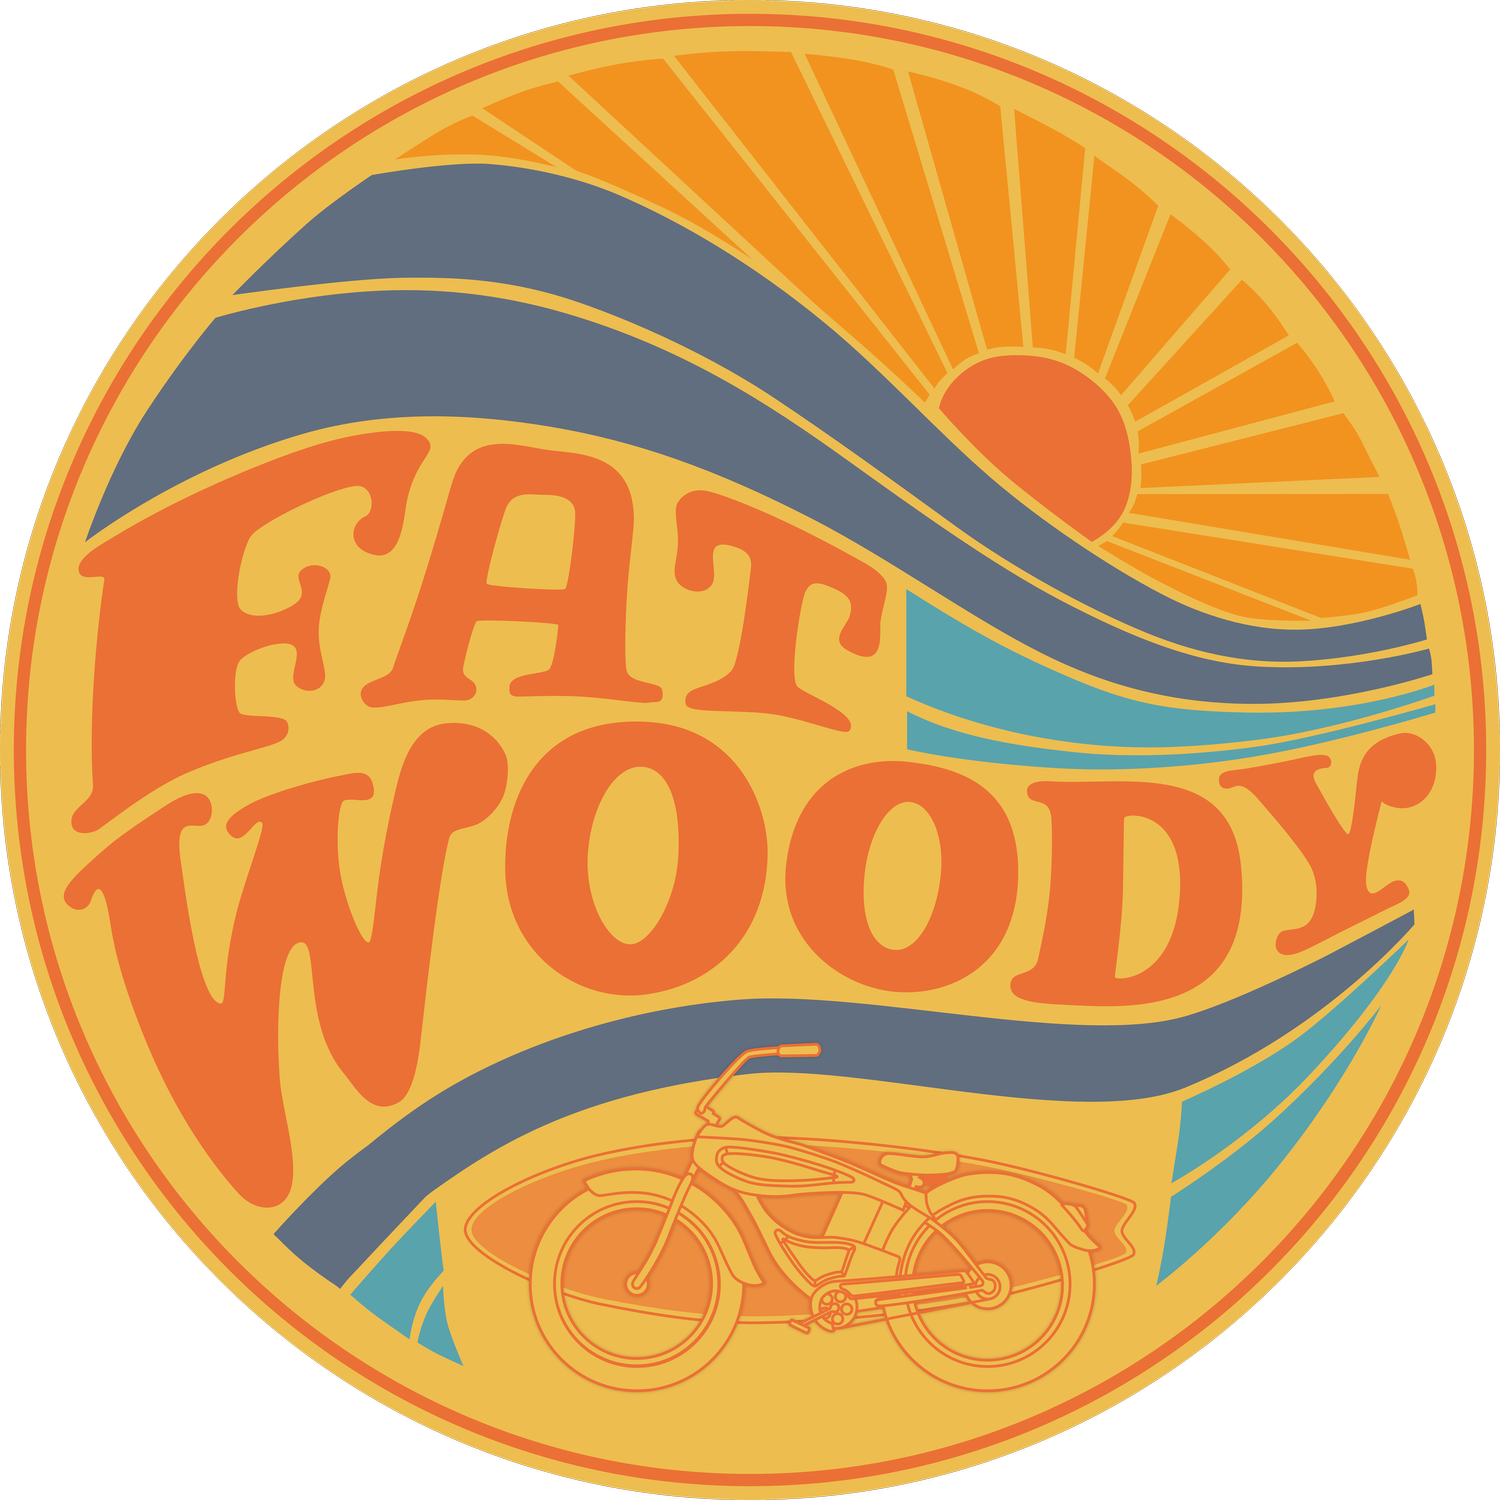 Fat Woody Coronado Beach Cruiser Experience